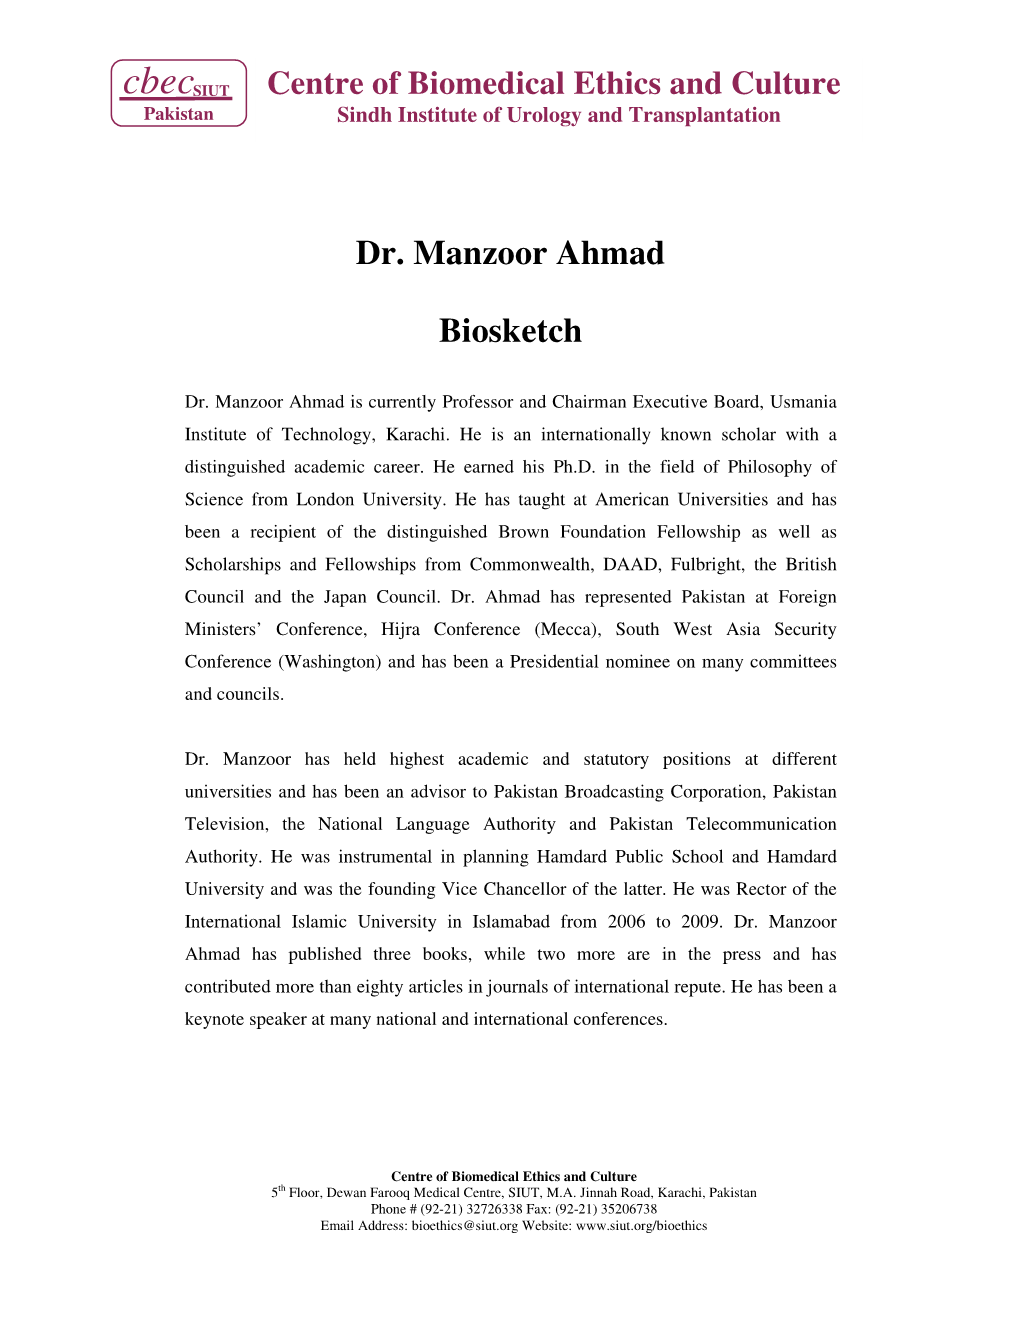 Dr. Manzoor Ahmad Biosketch